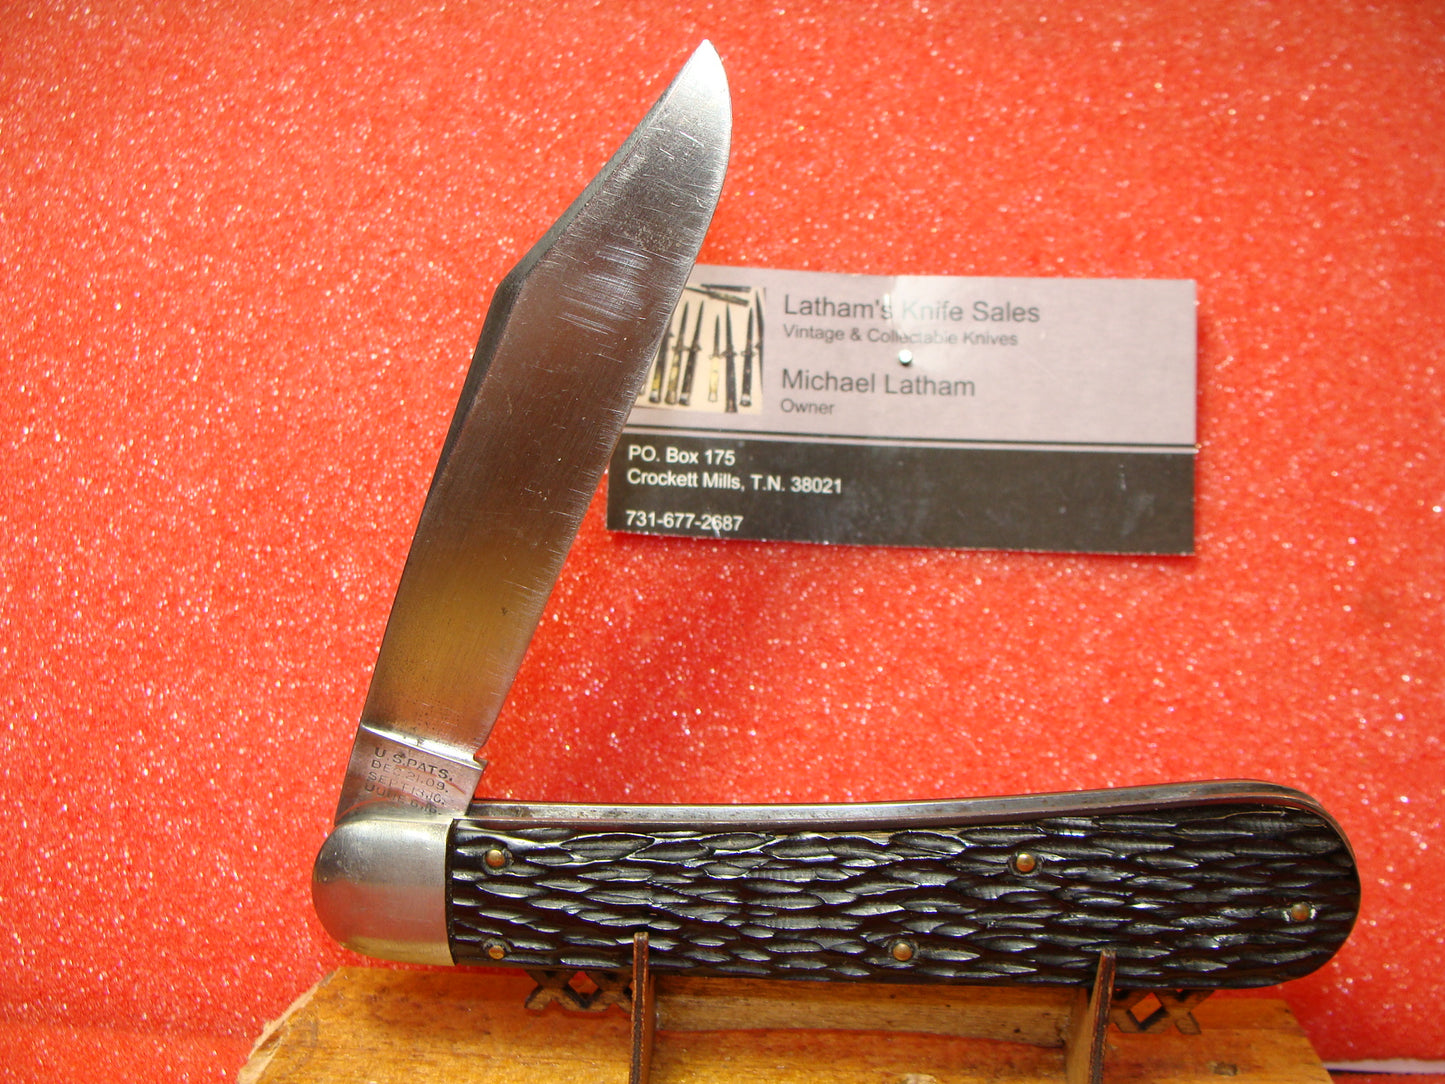 SCHRADE CUT CO. WALDEN NY 1916-46 VINTAGE AMERICAN AUTOMATIC KNIFE 4 7/8" HUNTER BLACK IMITATION JIGGED HANDLES